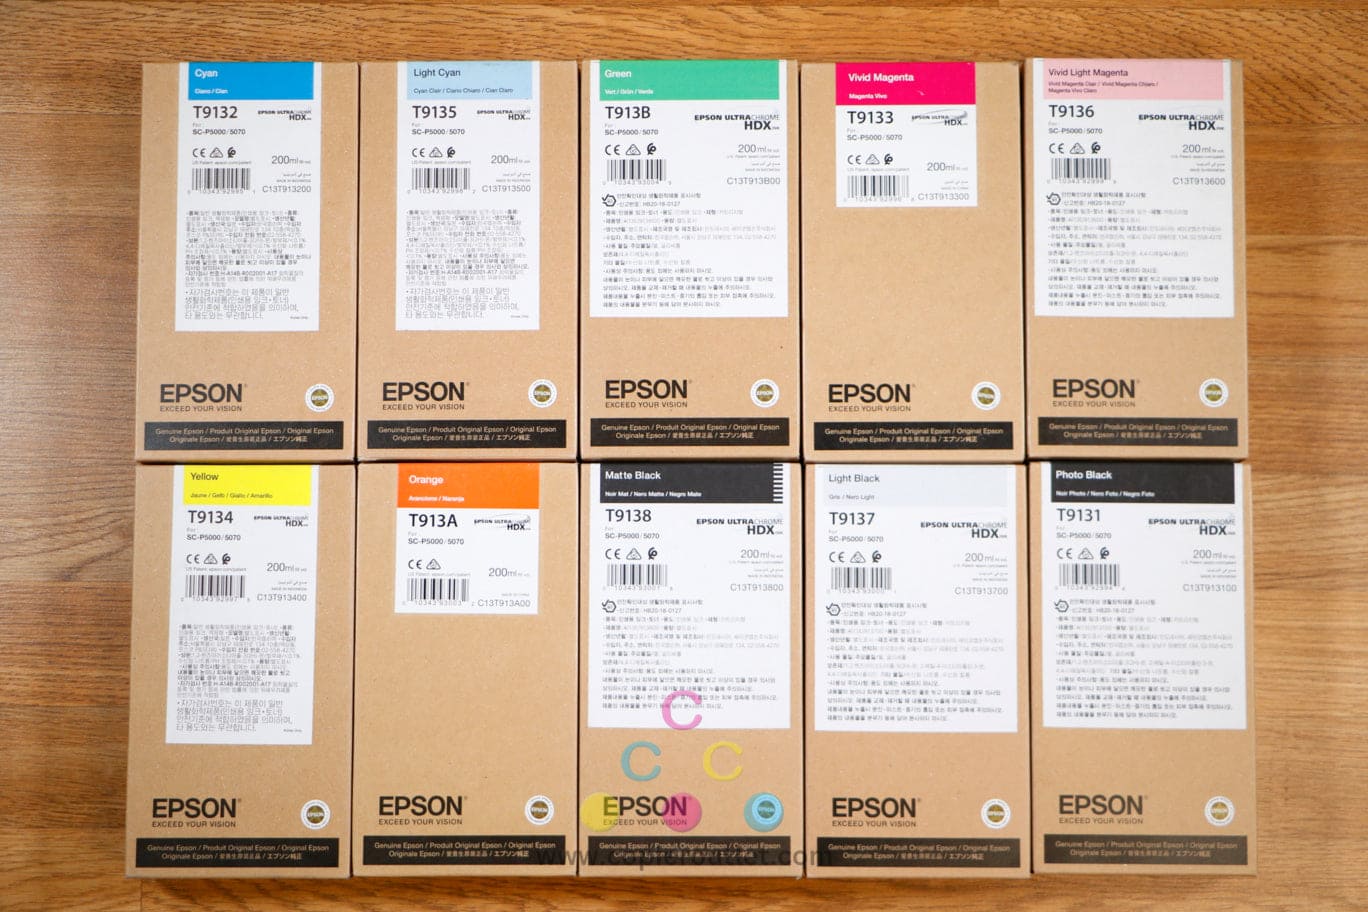 10 Epson HDR Ink C,LC,LM,M,Y,O,G,LK,PK,MBK 200ml Toner Cartridges SC-P5000 5070!